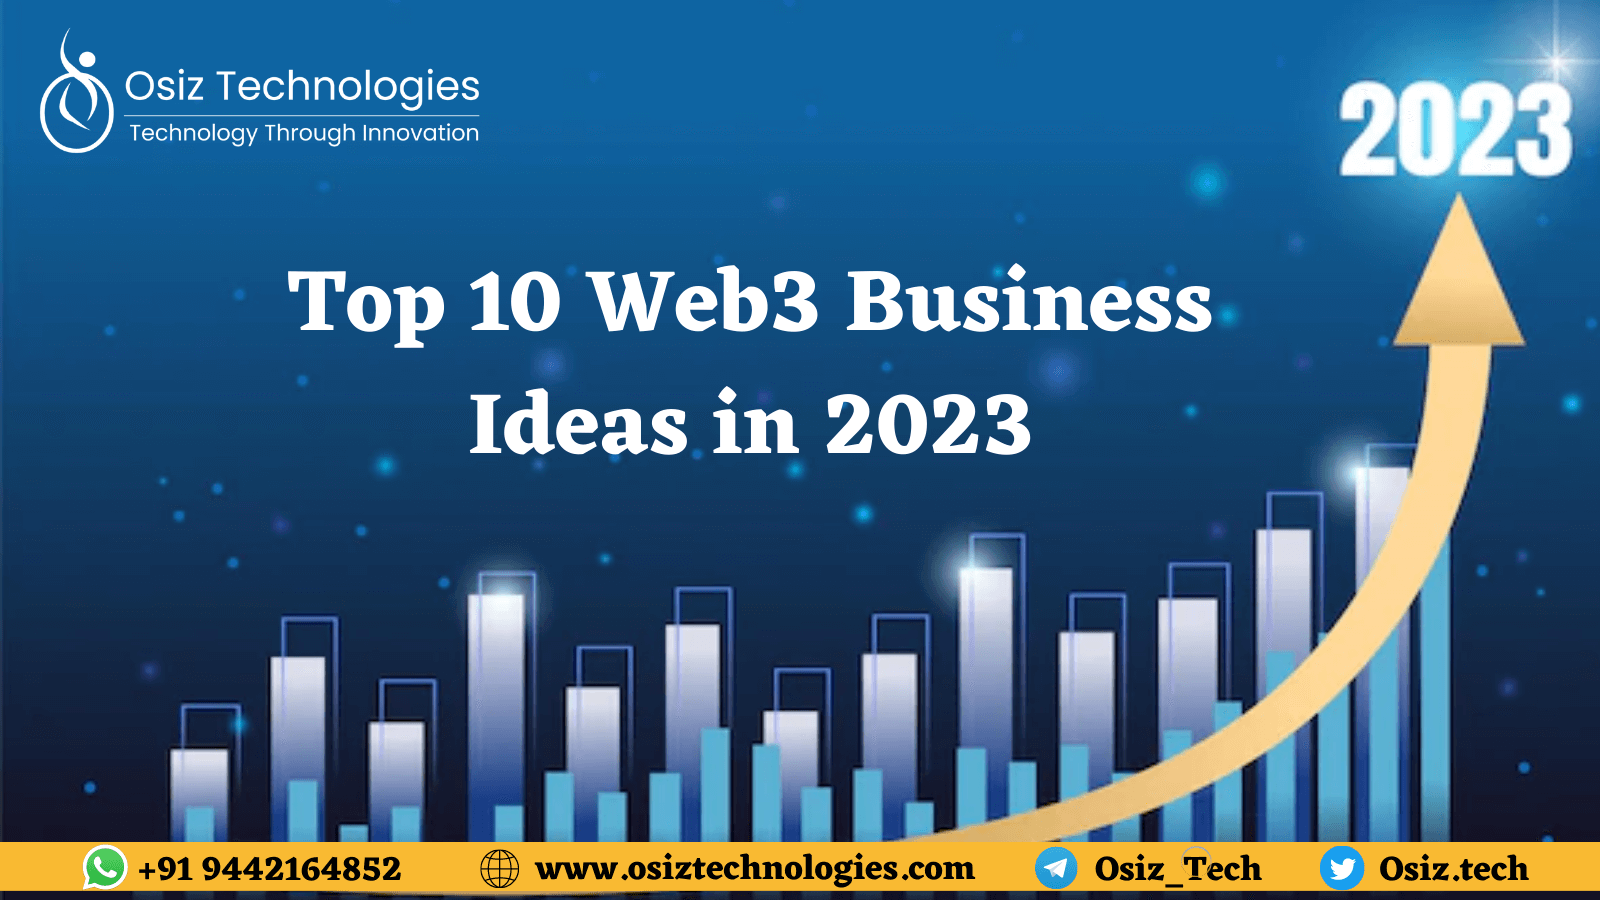 Top 10 Web3 Business Ideas 2023